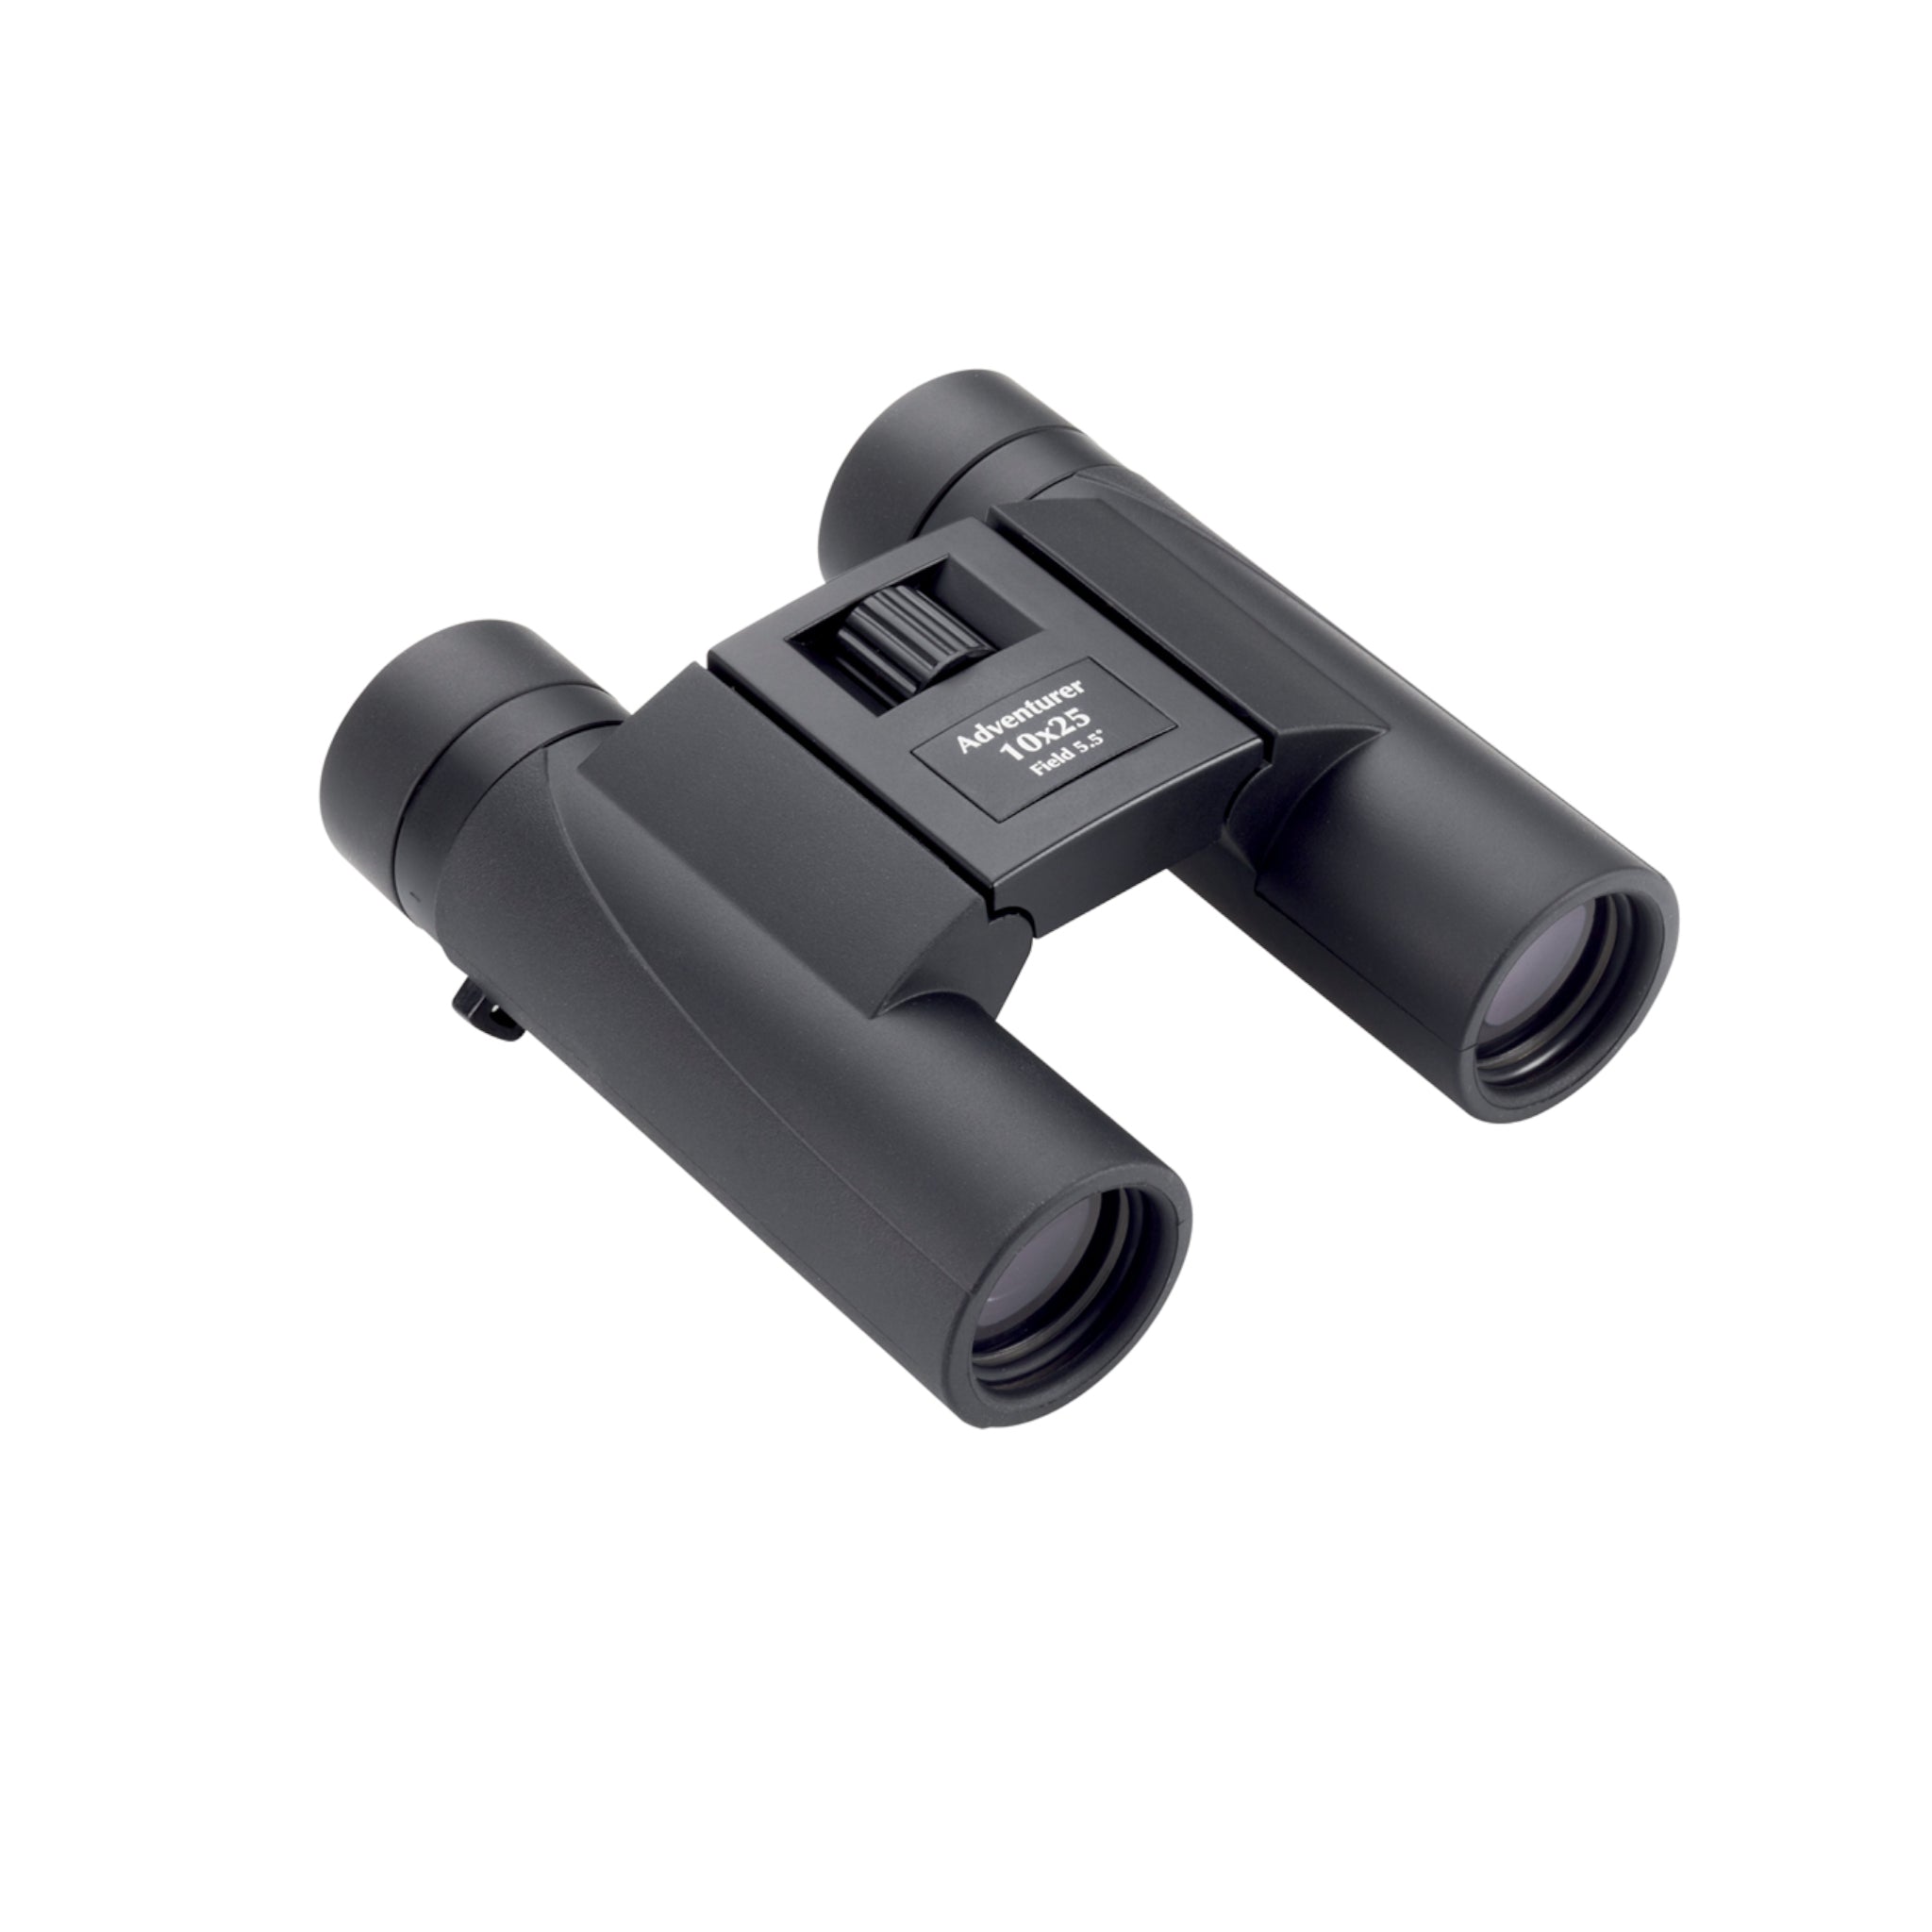 Opticron Adventurer 10x25 Binoculars (Black)